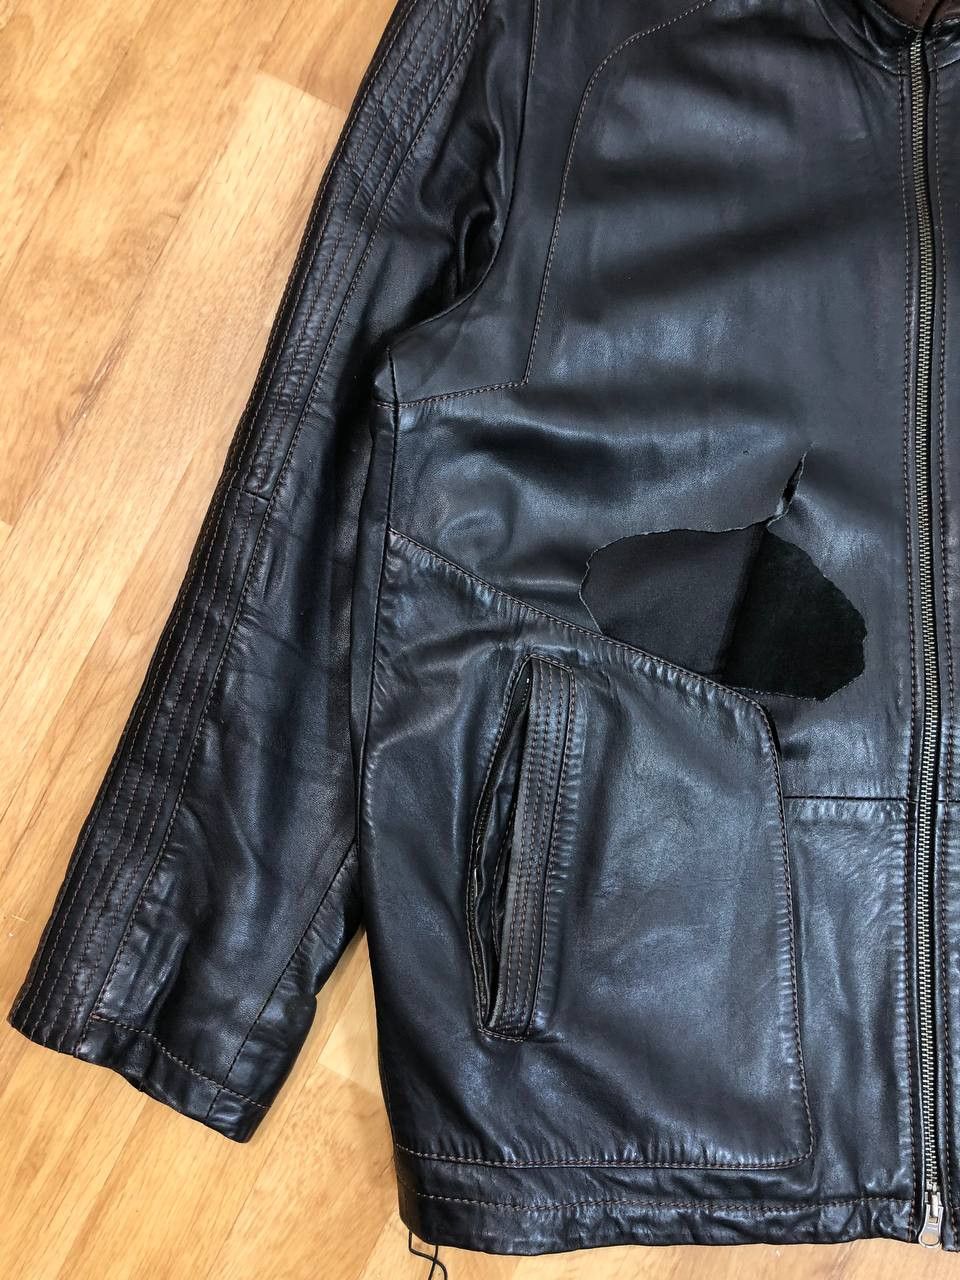 Genuine Leather 90s genuine leather gray boxy bomber jacket avant garde Size US L / EU 52-54 / 3 - 9 Thumbnail